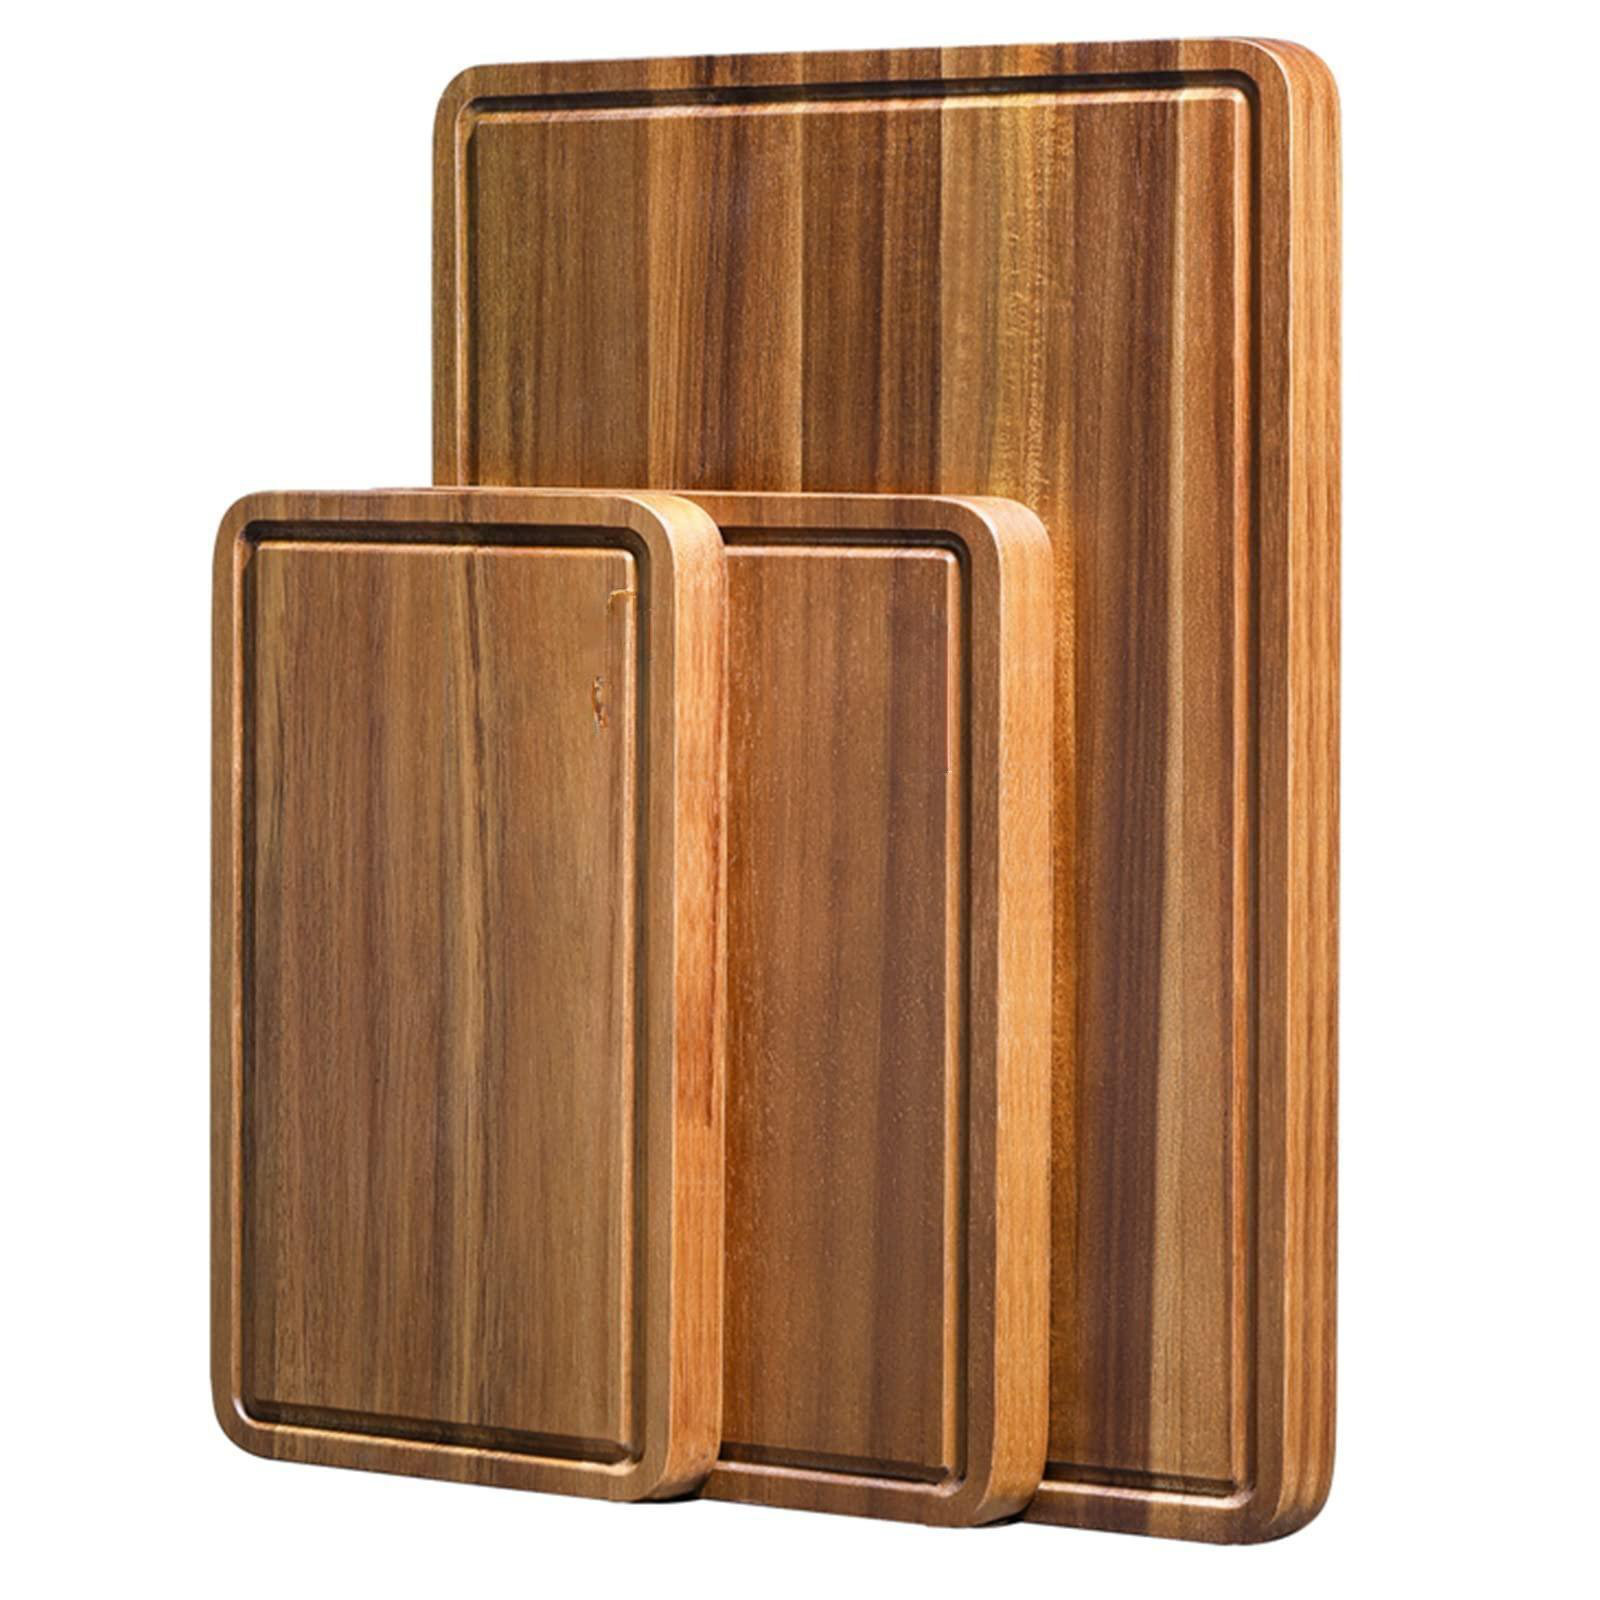 Wood Cutting Board, Large Cutting Board, With Rubberized Feet, Custom End  Grain Wood Cutting Board, Butcher Block, With Handles, Acacia Wood 